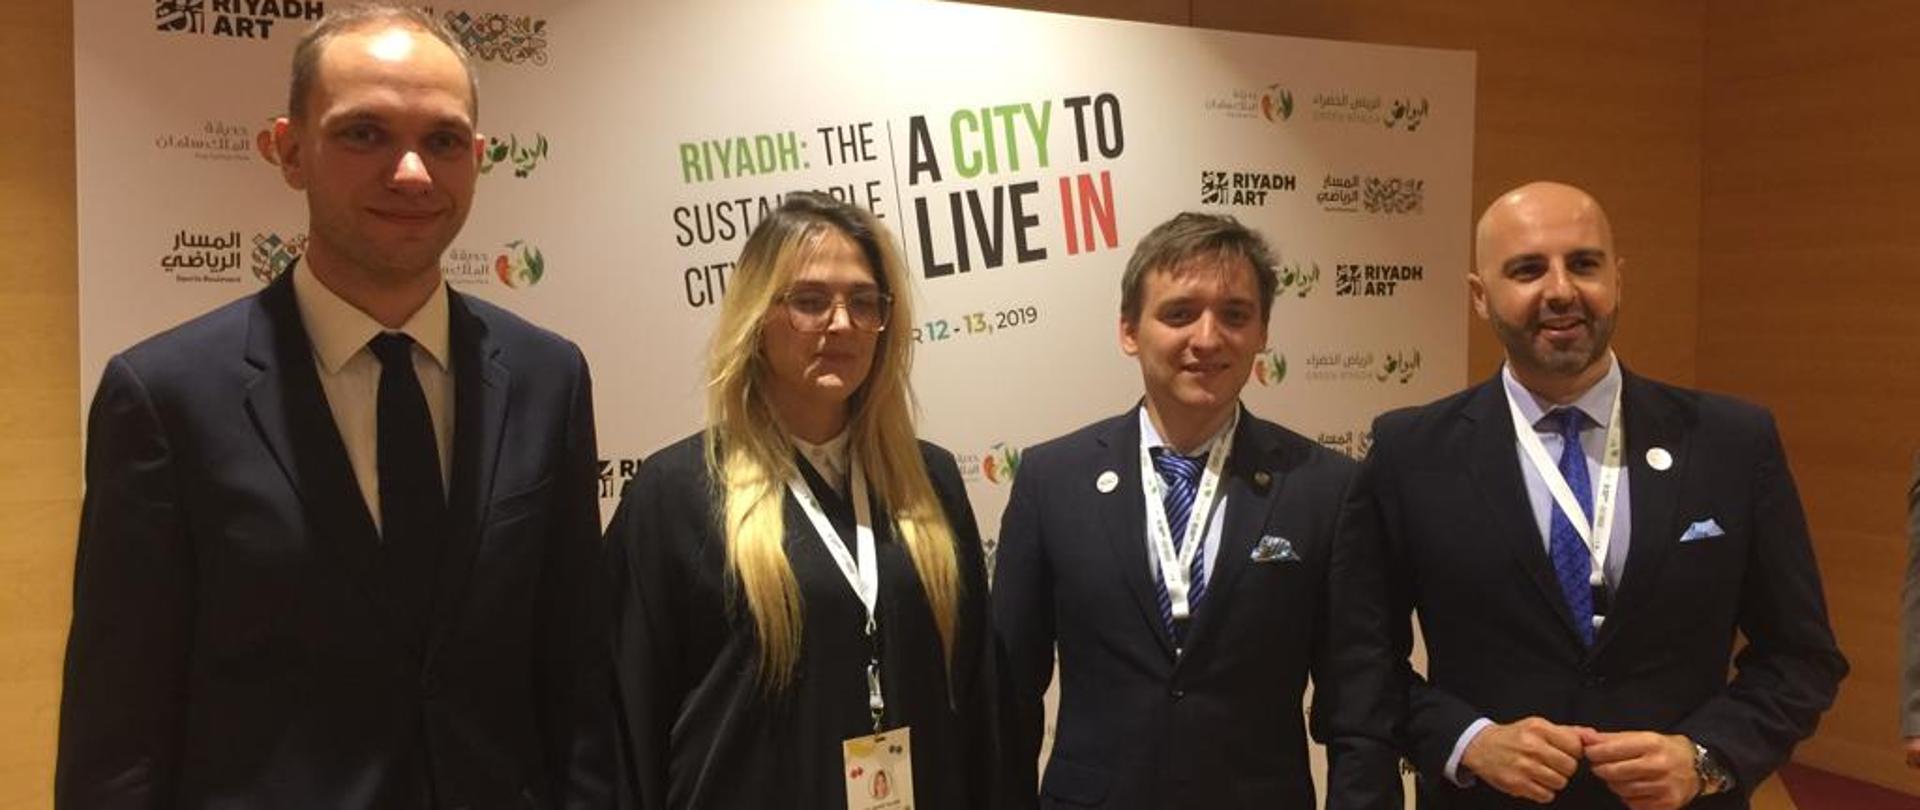 Poland’s Representatives on „Riyadh The Sustainable City” Symposium